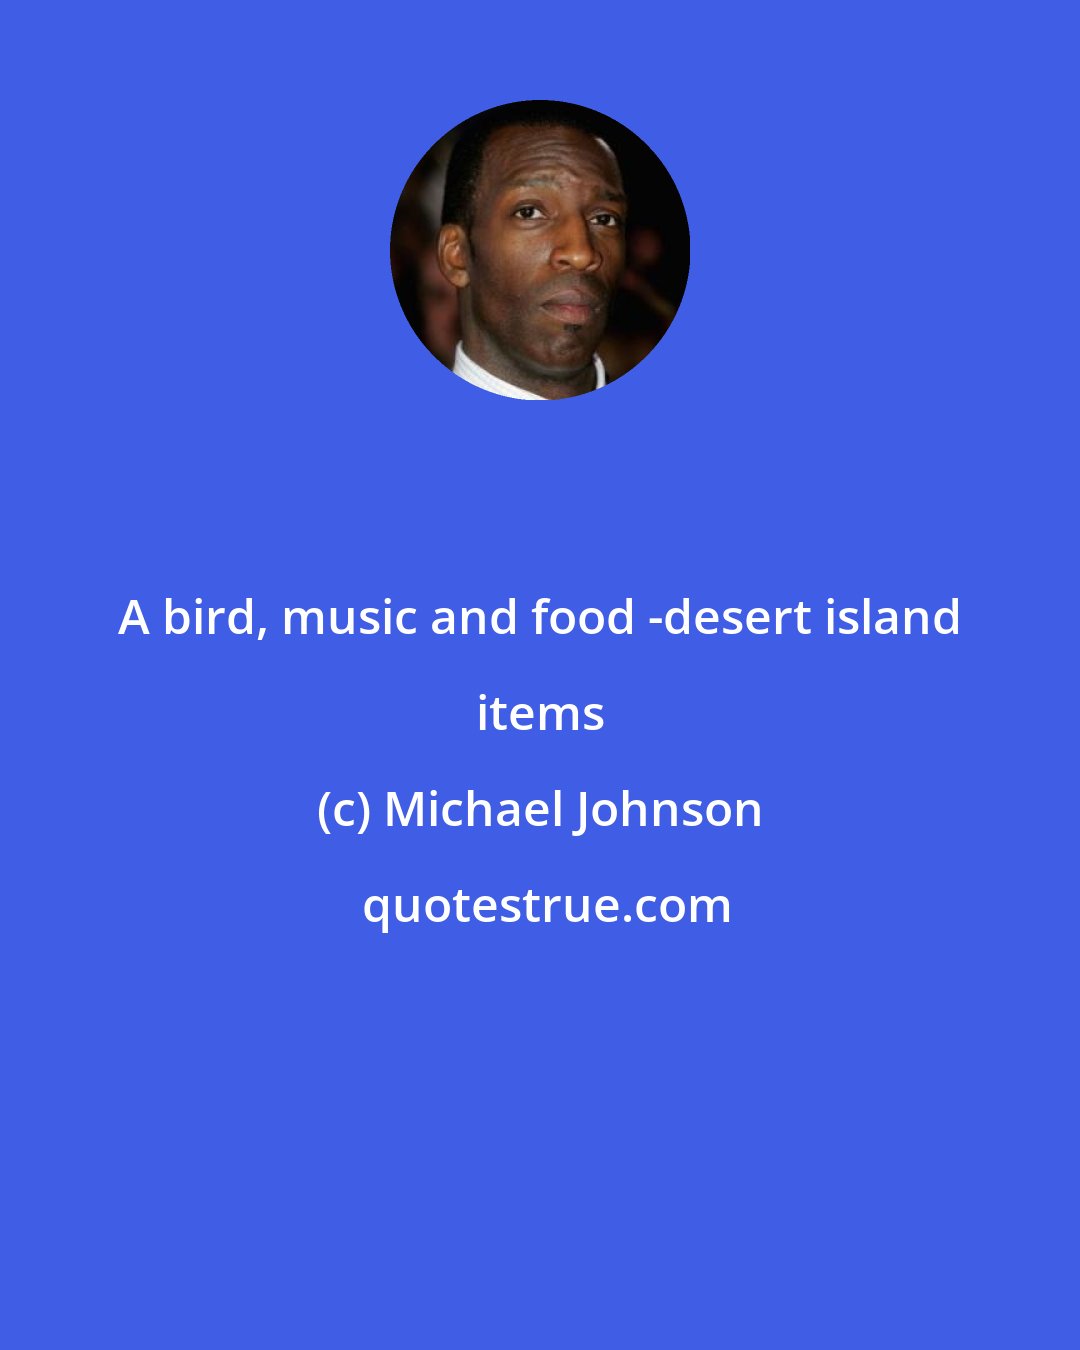 Michael Johnson: A bird, music and food -desert island items